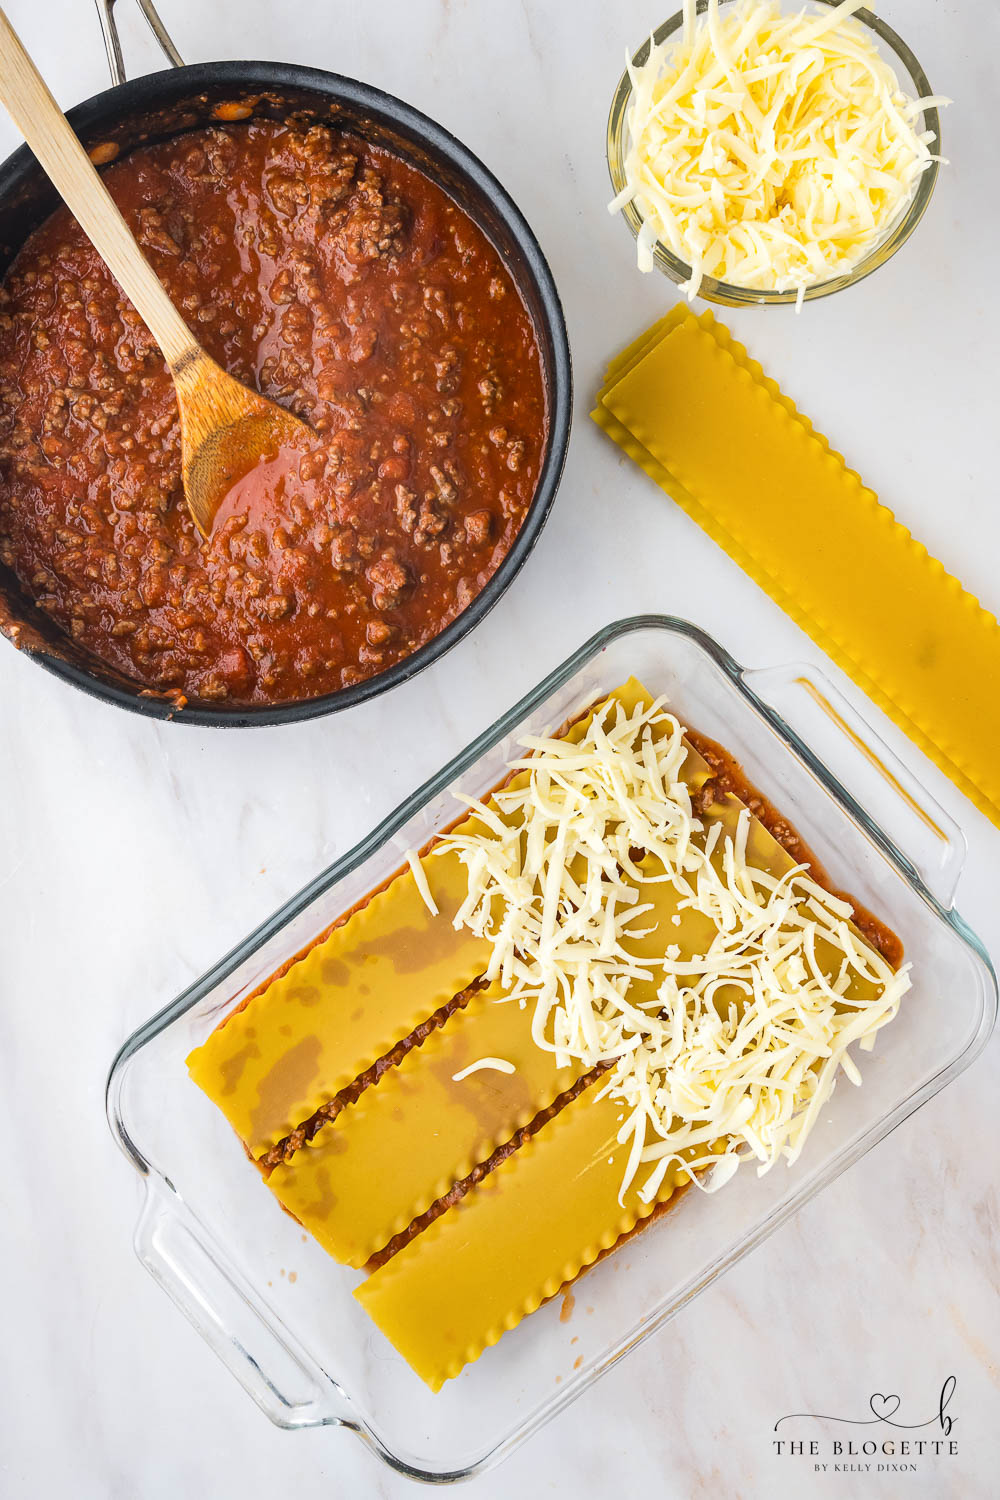 Lasagna with uncooled noodles